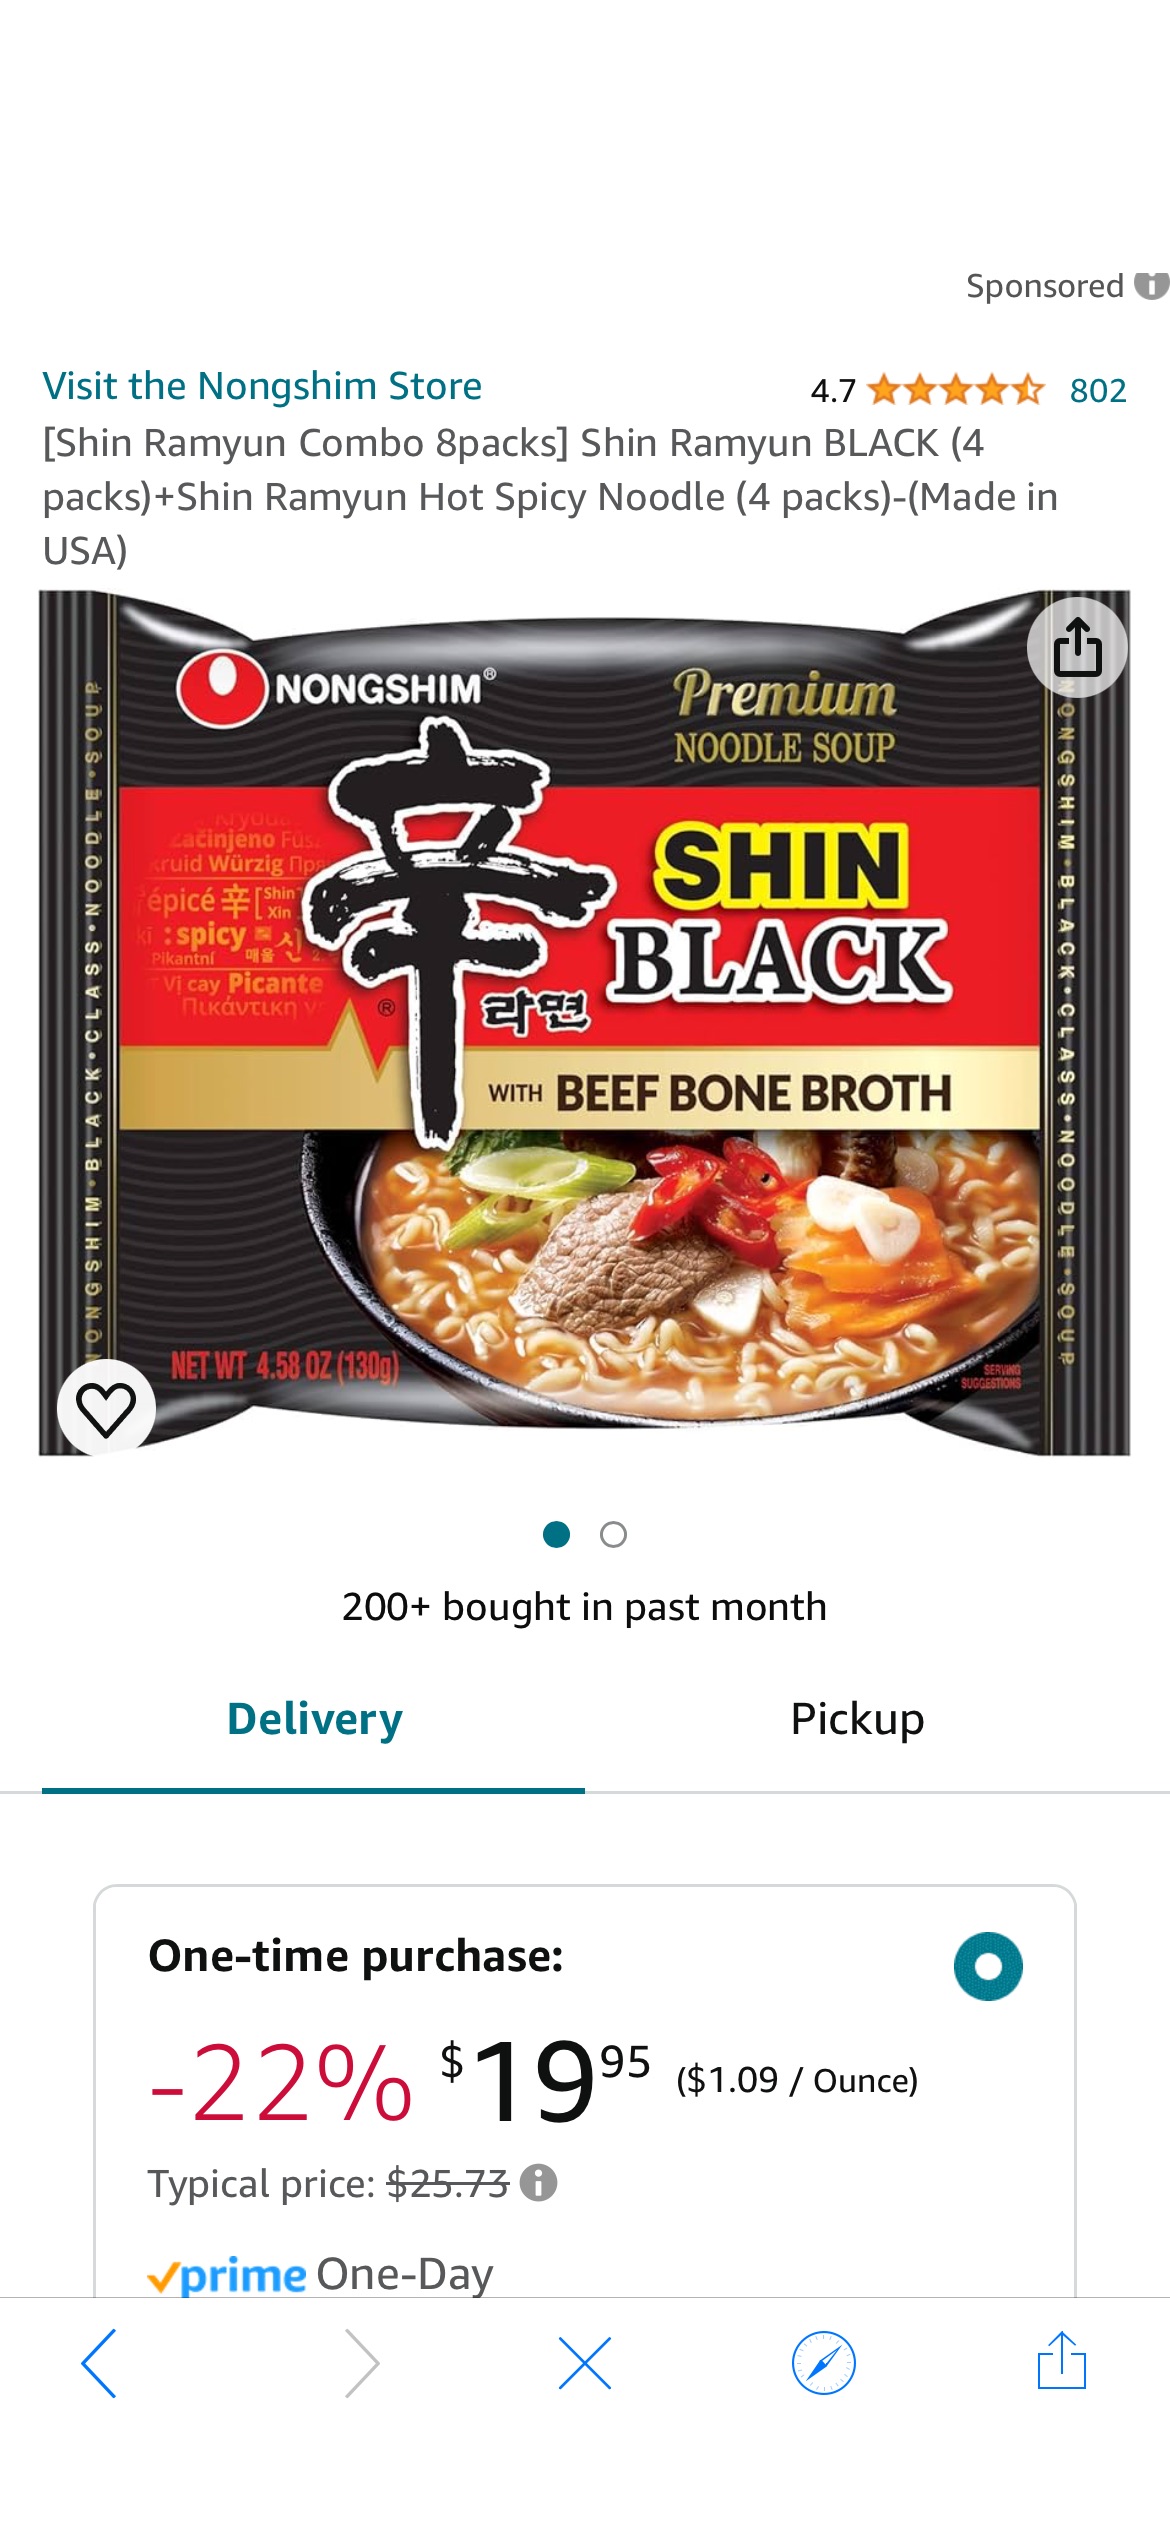 Amazon.com: [Shin Ramyun Combo 8packs] Shin Ramyun BLACK (4 packs)+Shin Ramyun Hot Spicy Noodle (4 packs)-(Made in USA) : Grocery & Gourmet Food